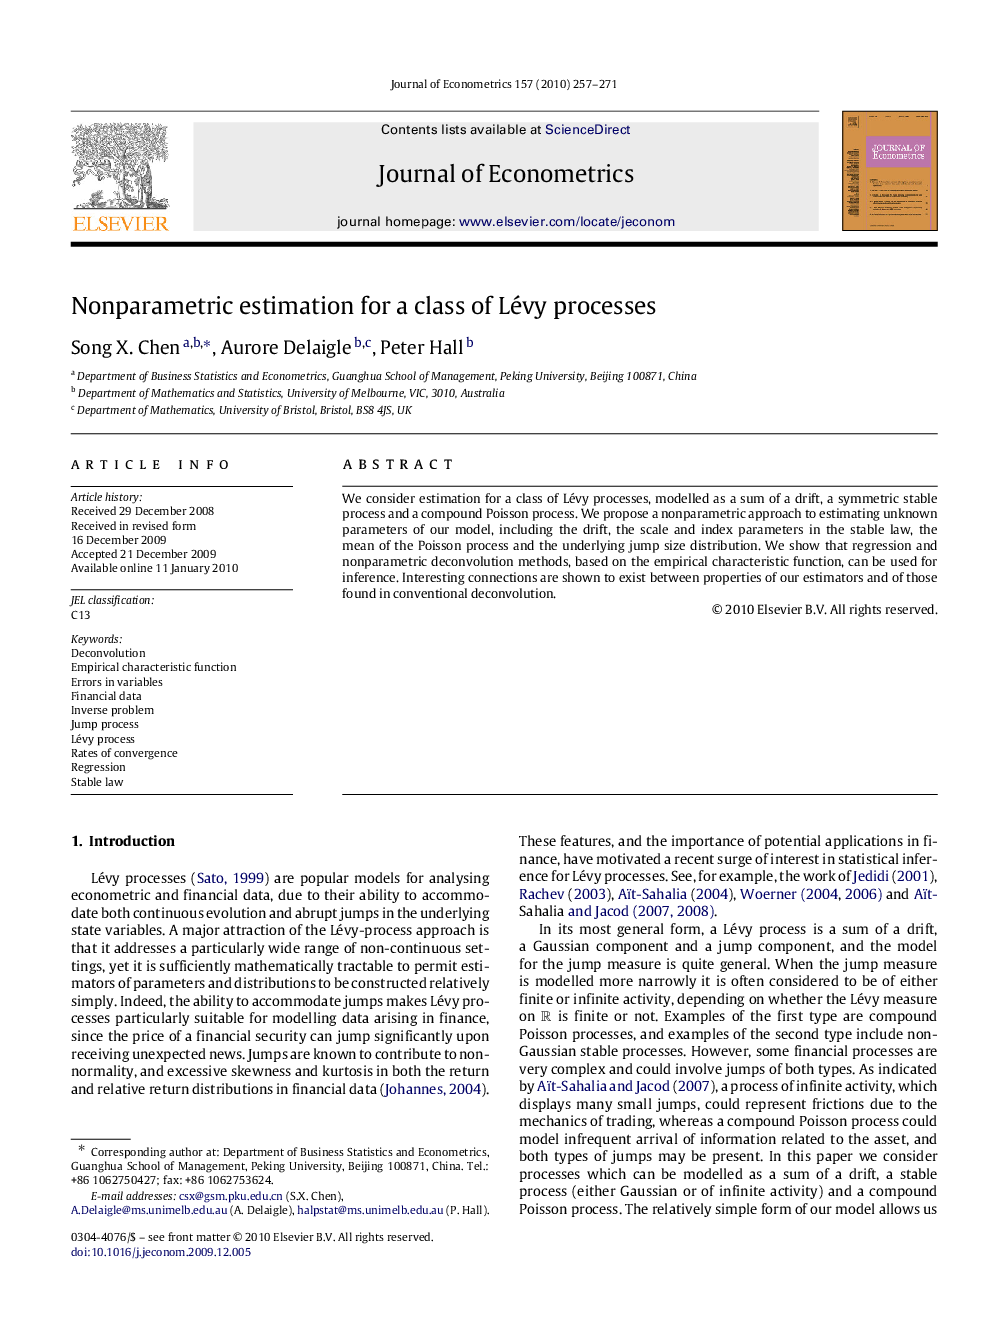 Nonparametric estimation for a class of Lévy processes